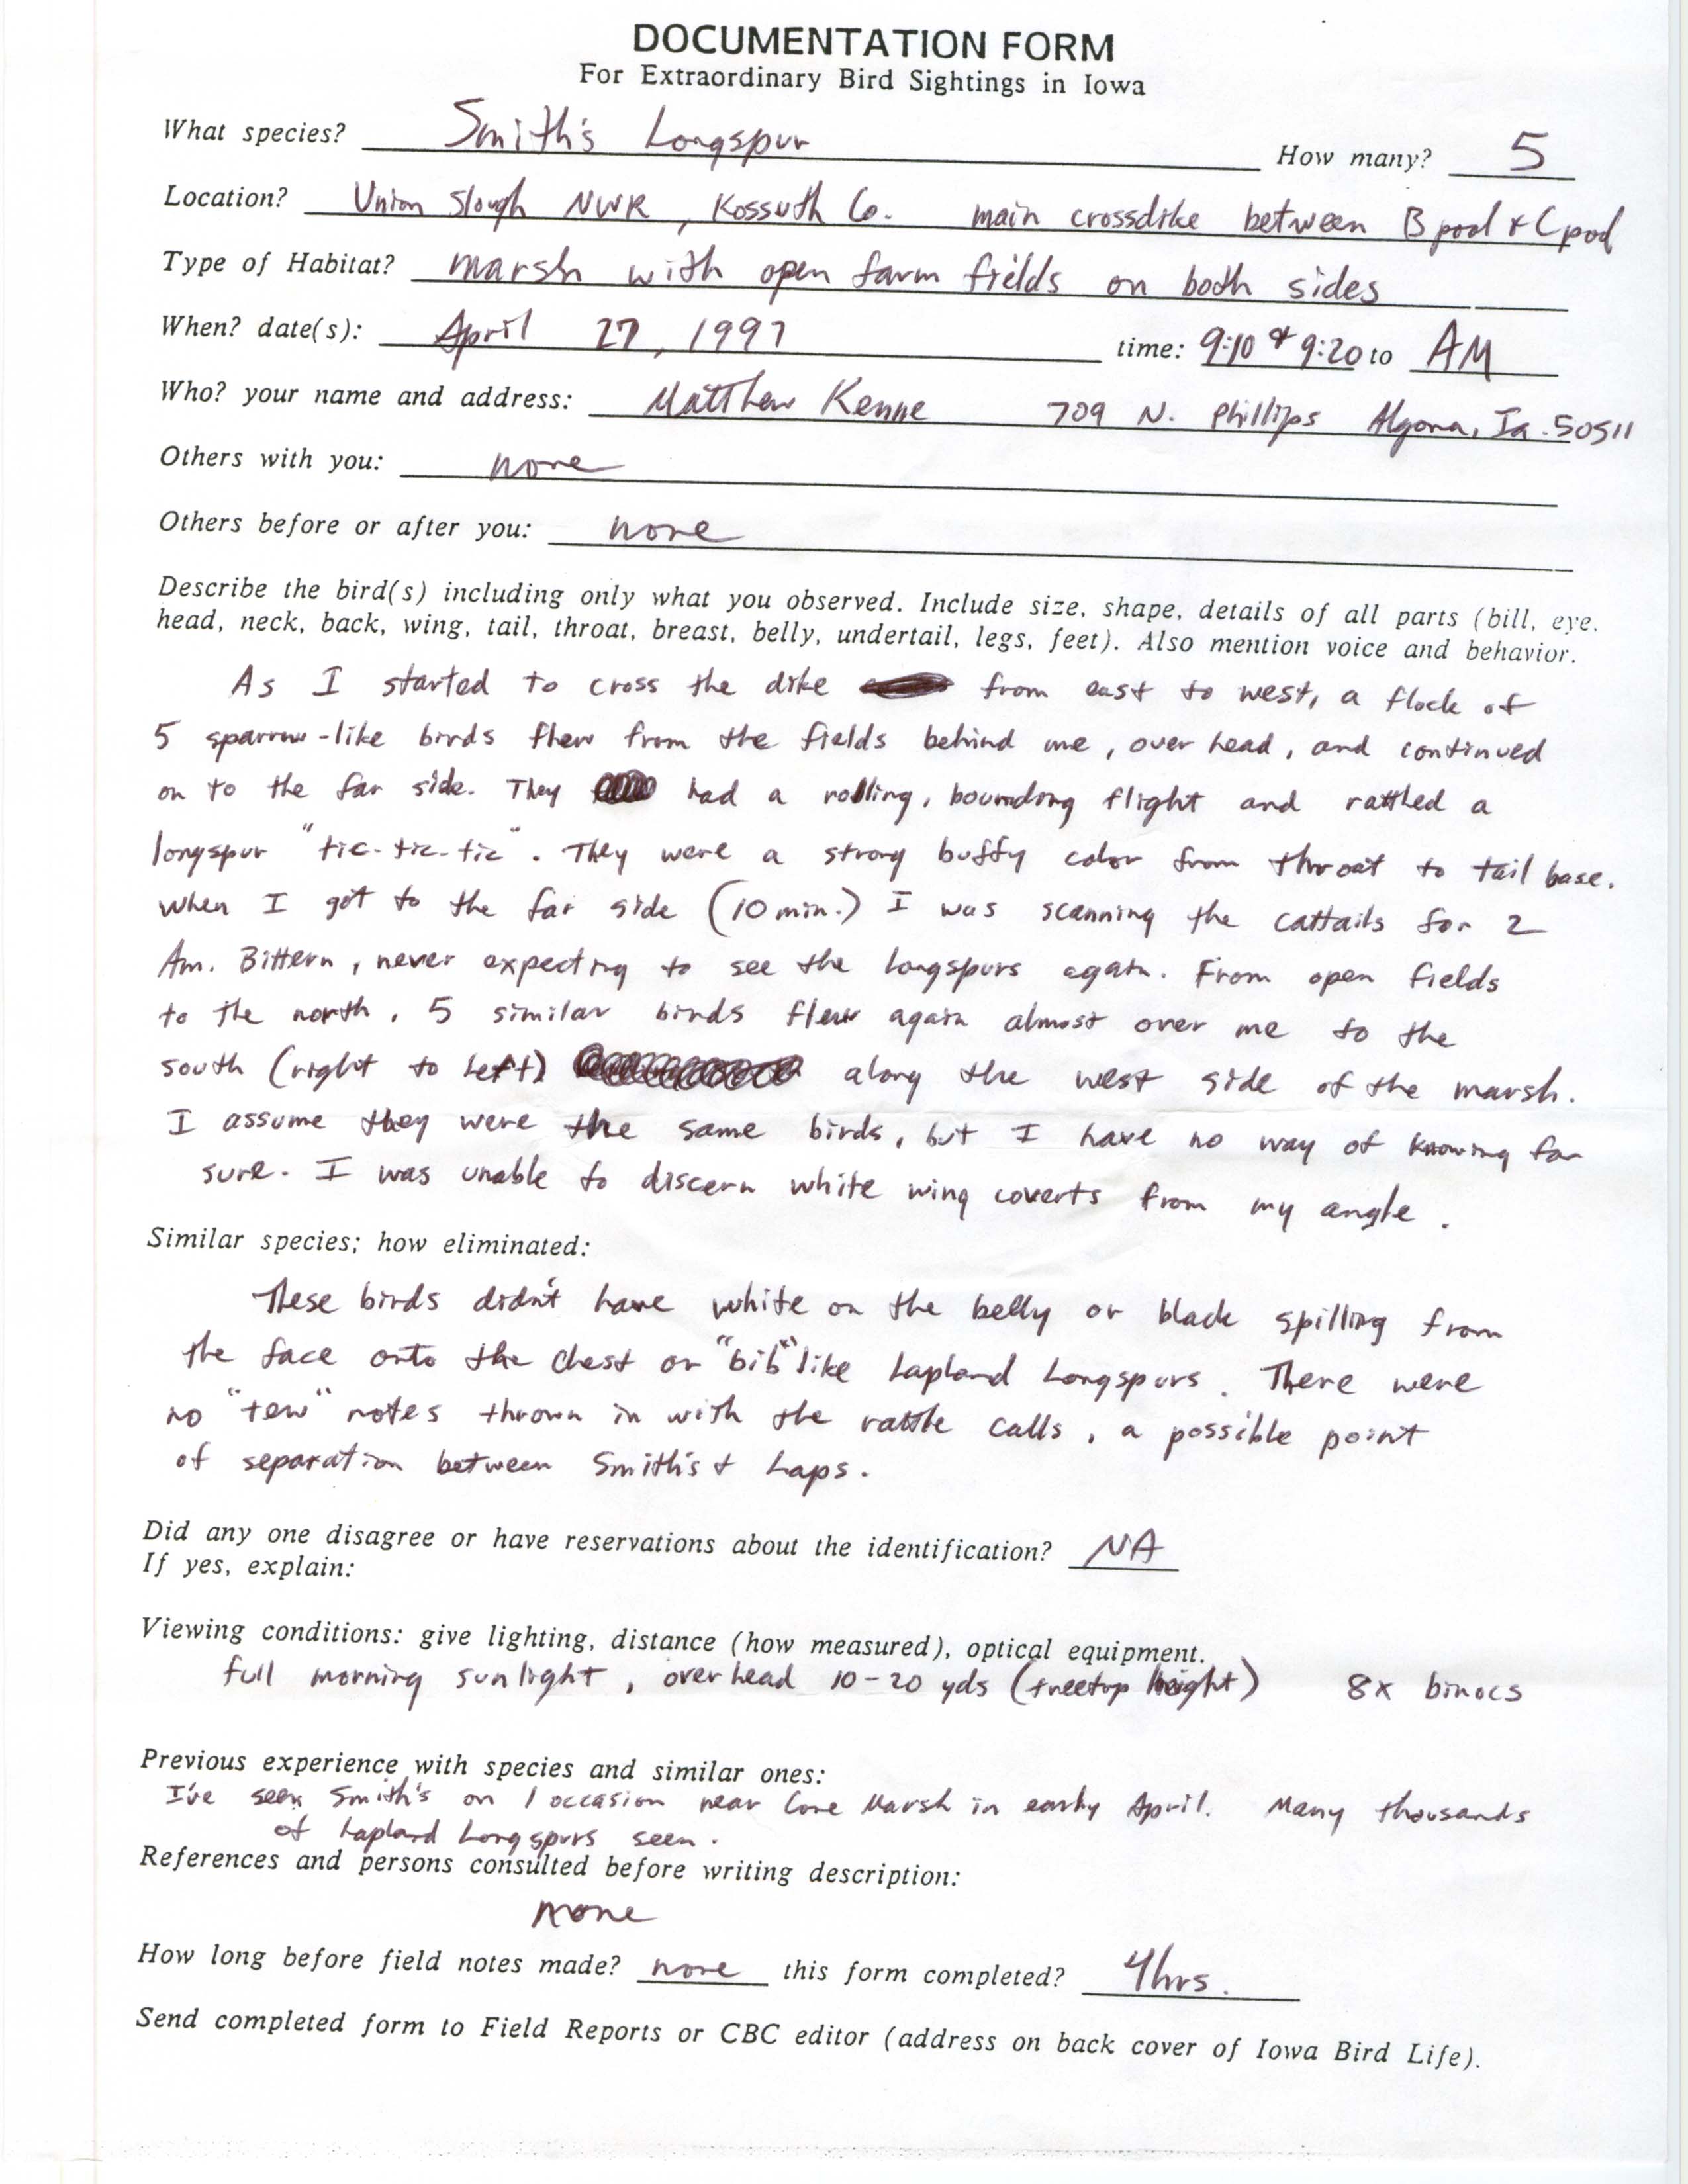 Rare bird documentation form for Smith's Longspur at Union Slough NWR, 1997